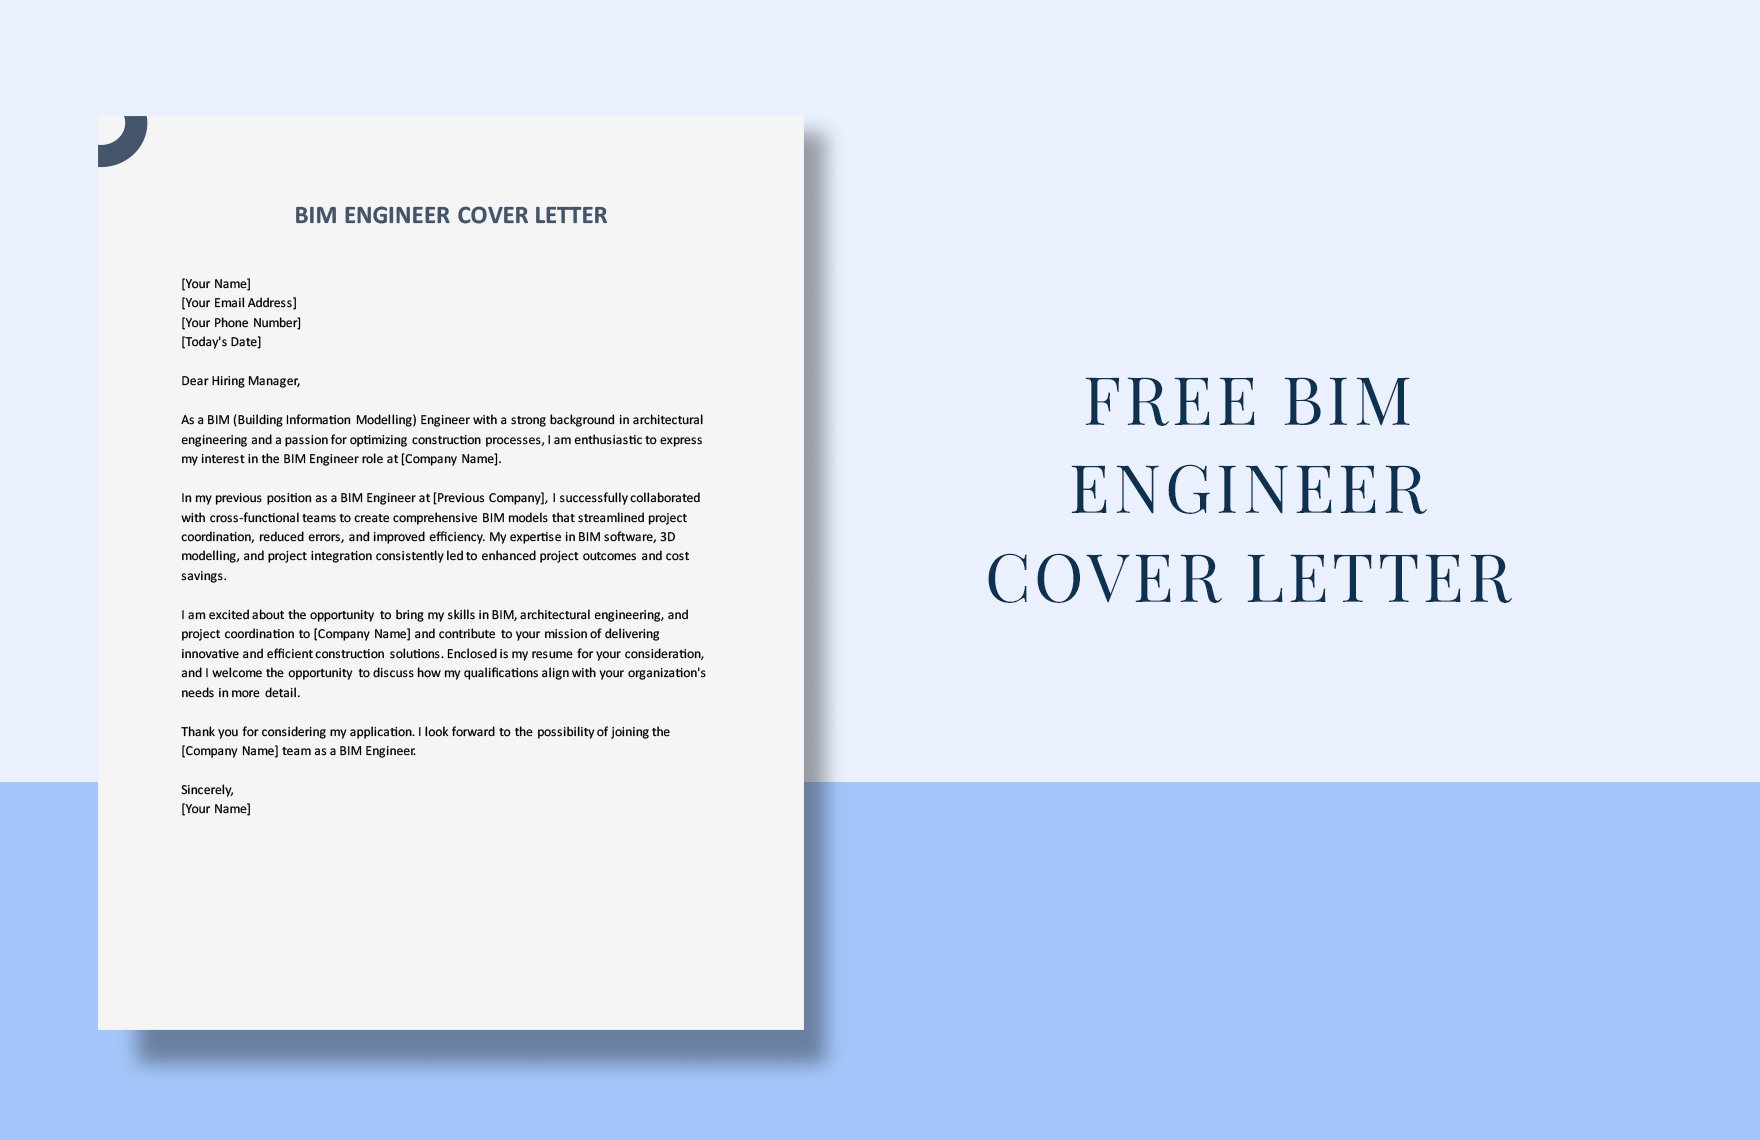 BIM Engineer Cover Letter in Word, Google Docs, PDF